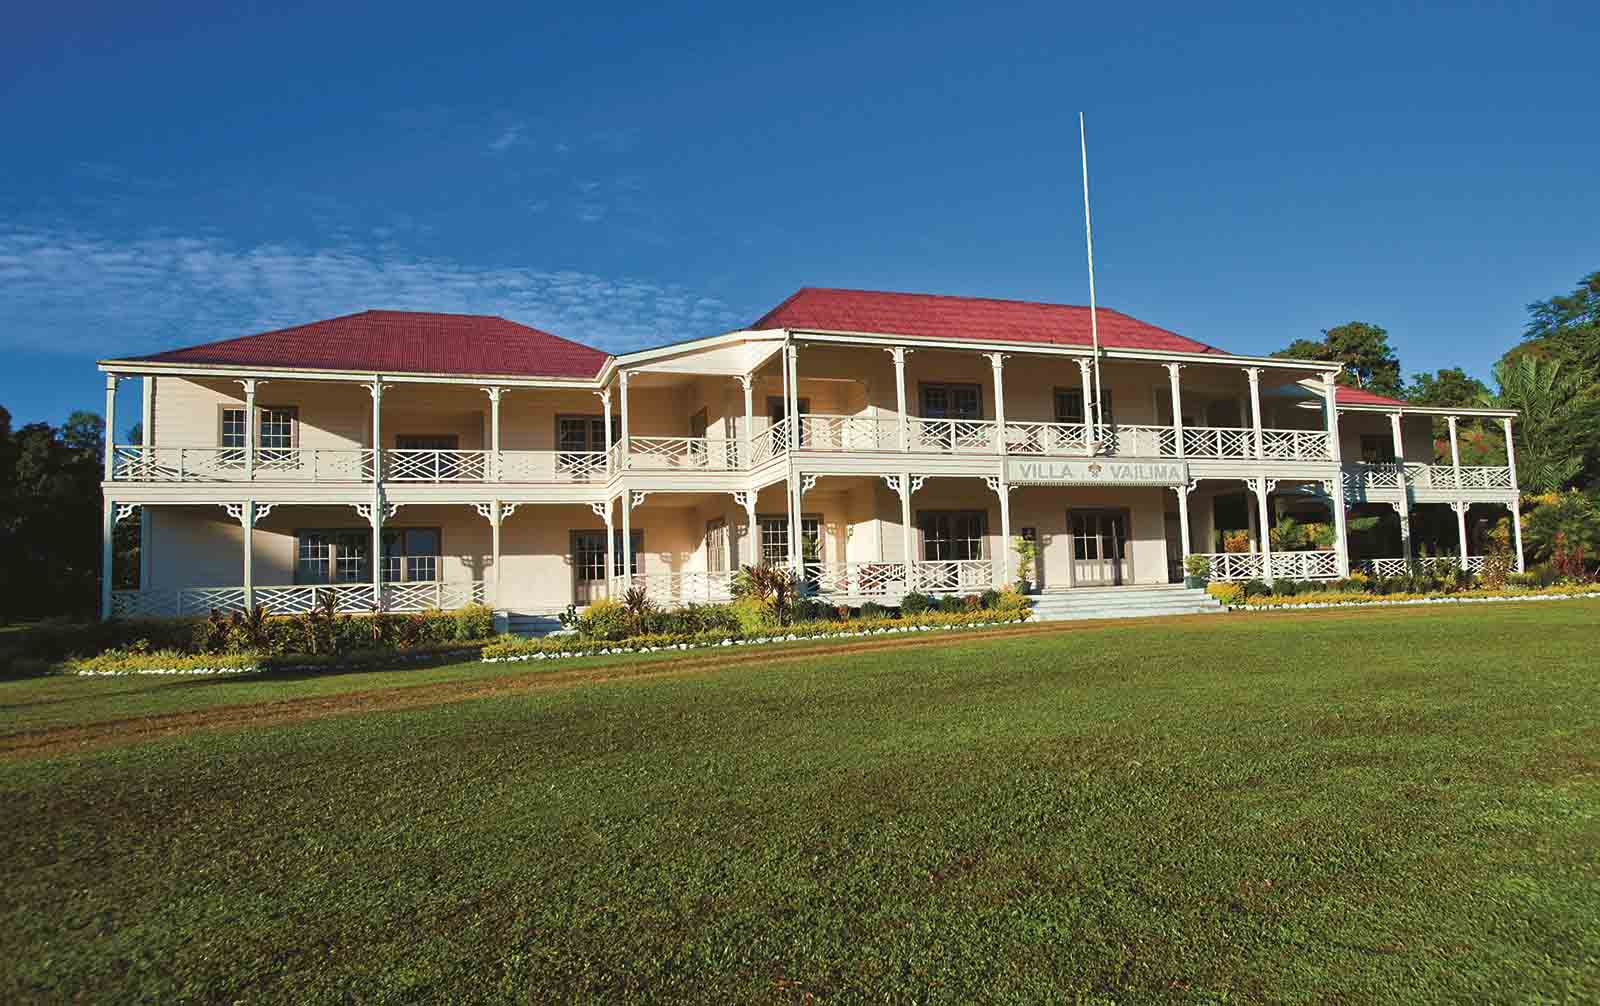 Vailima, the former home of Robert Louis Stevenson, Apia, Samoa